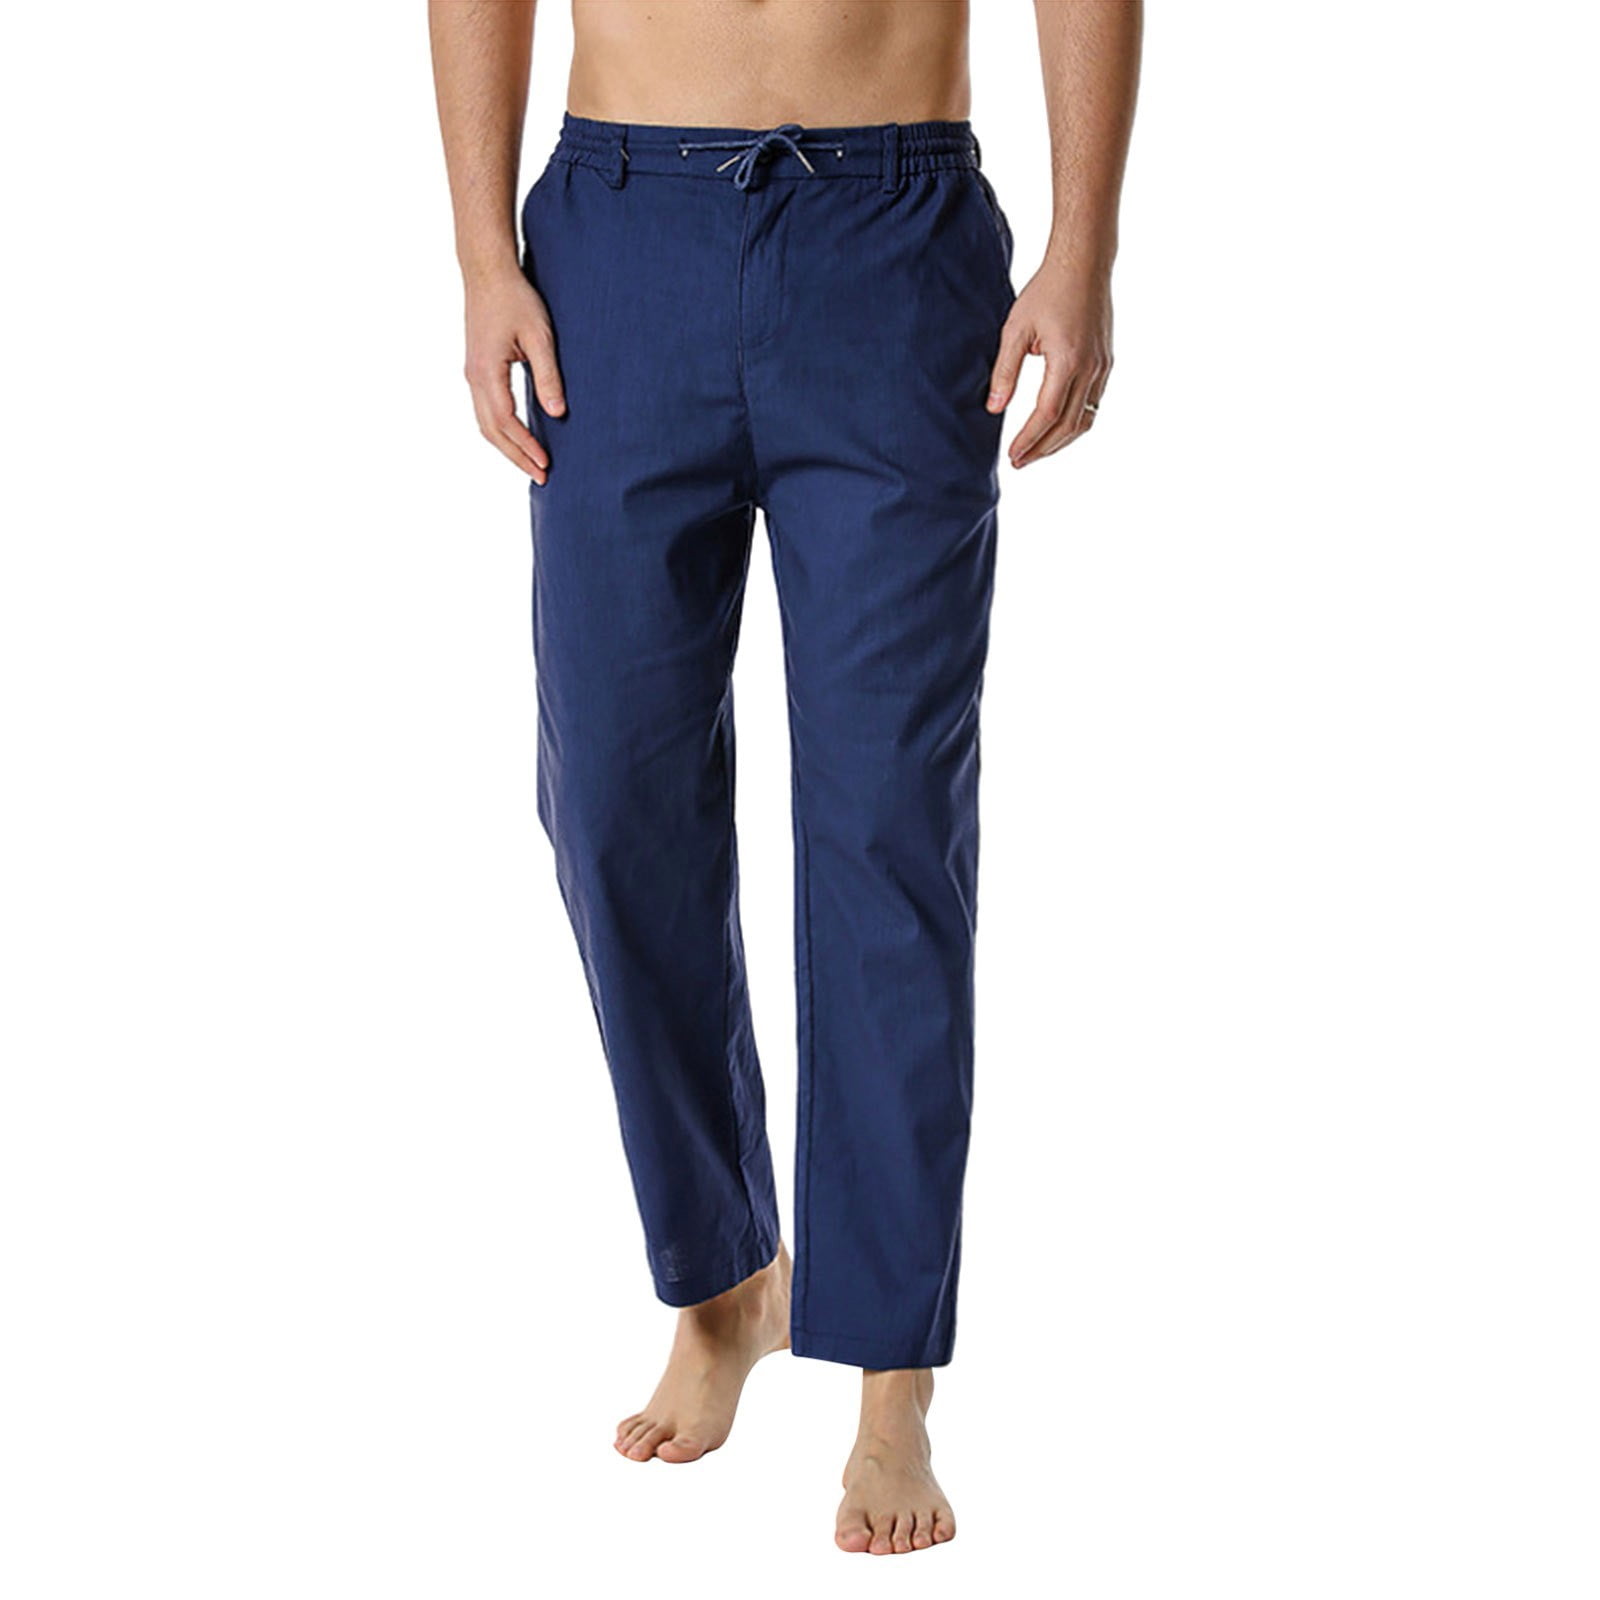 Blue Mens Workout Pants Casual Lightweight Elastic Waist Pants Loose ...